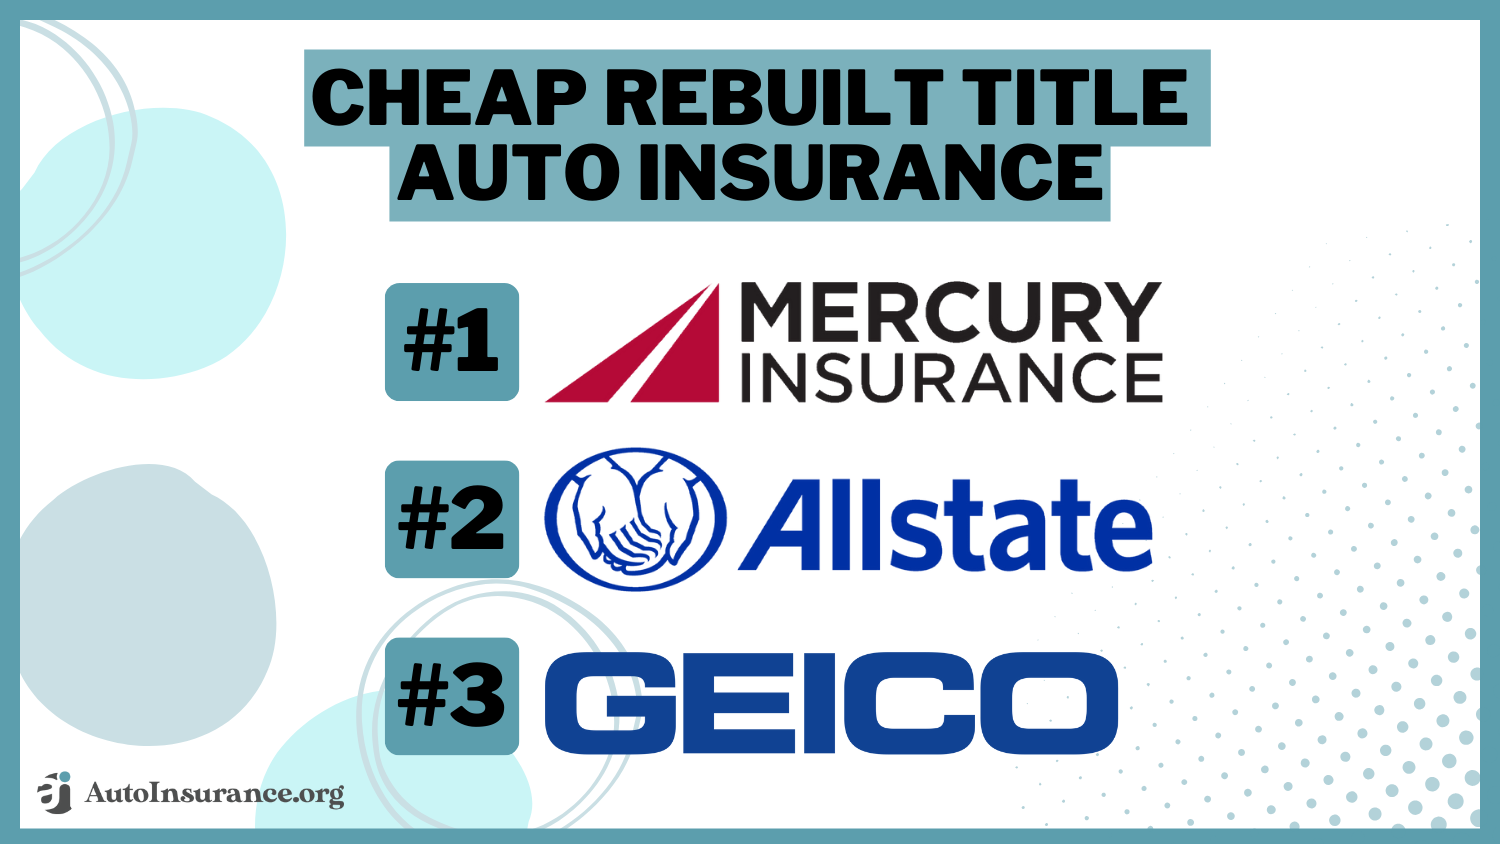 Mercury Allstate Geico cheap rebuilt title auto insurance